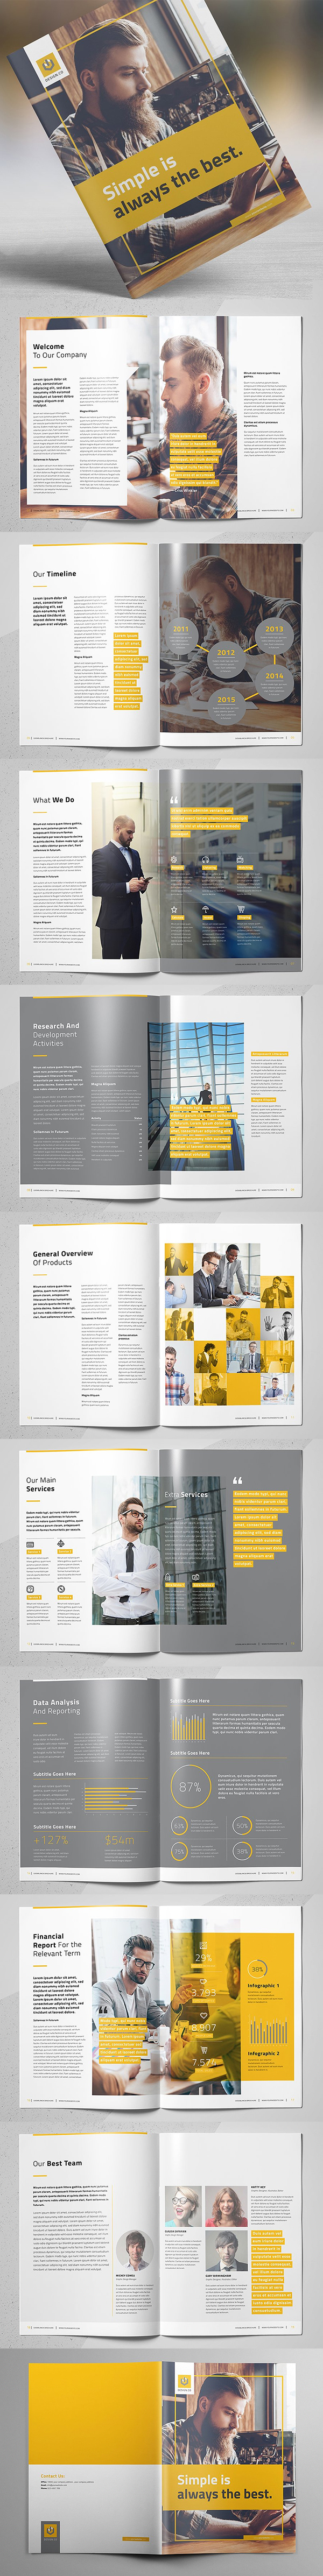 Creative Business Brochure Template